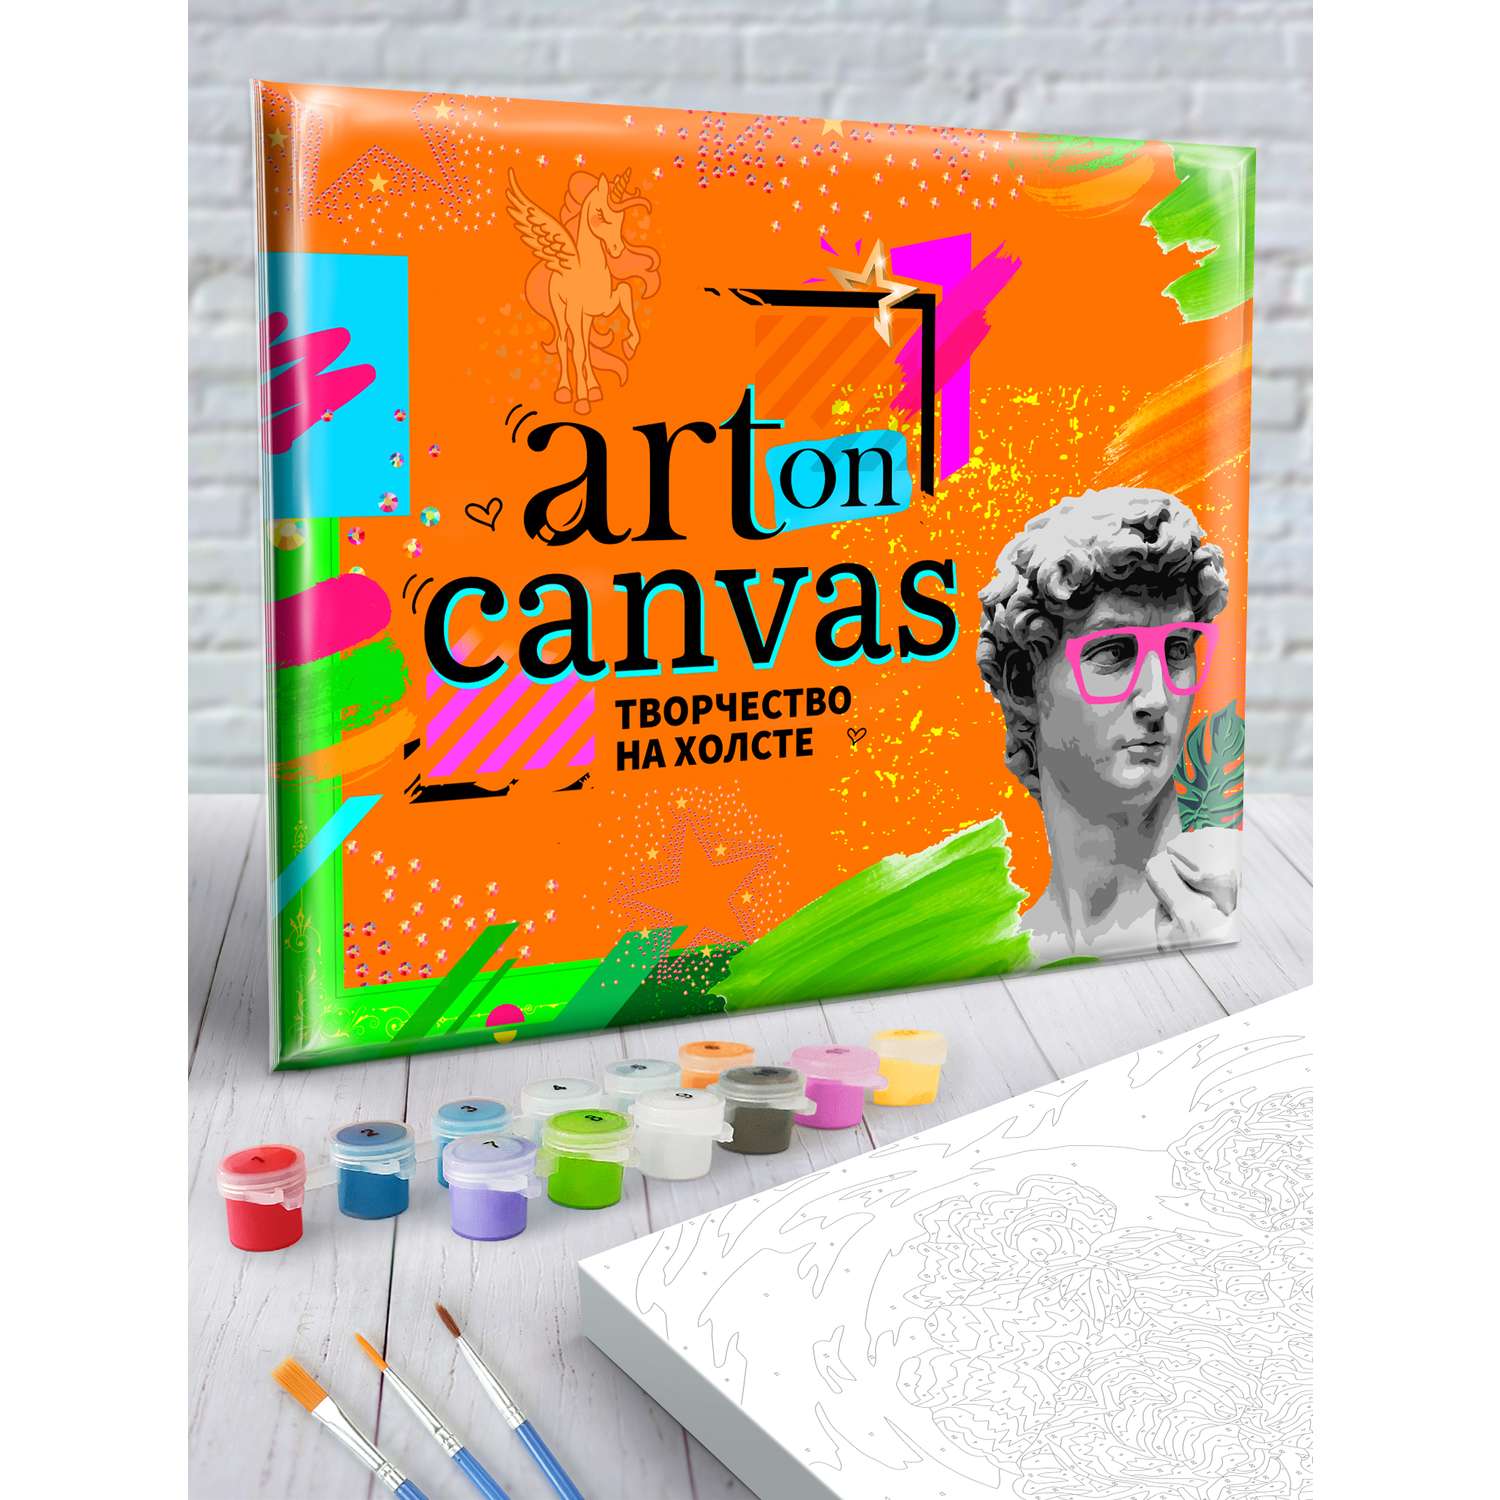 Картина по номерам Art on Canvas холст на подрамнике 40х50 см Тудлз Гэлор - фото 10